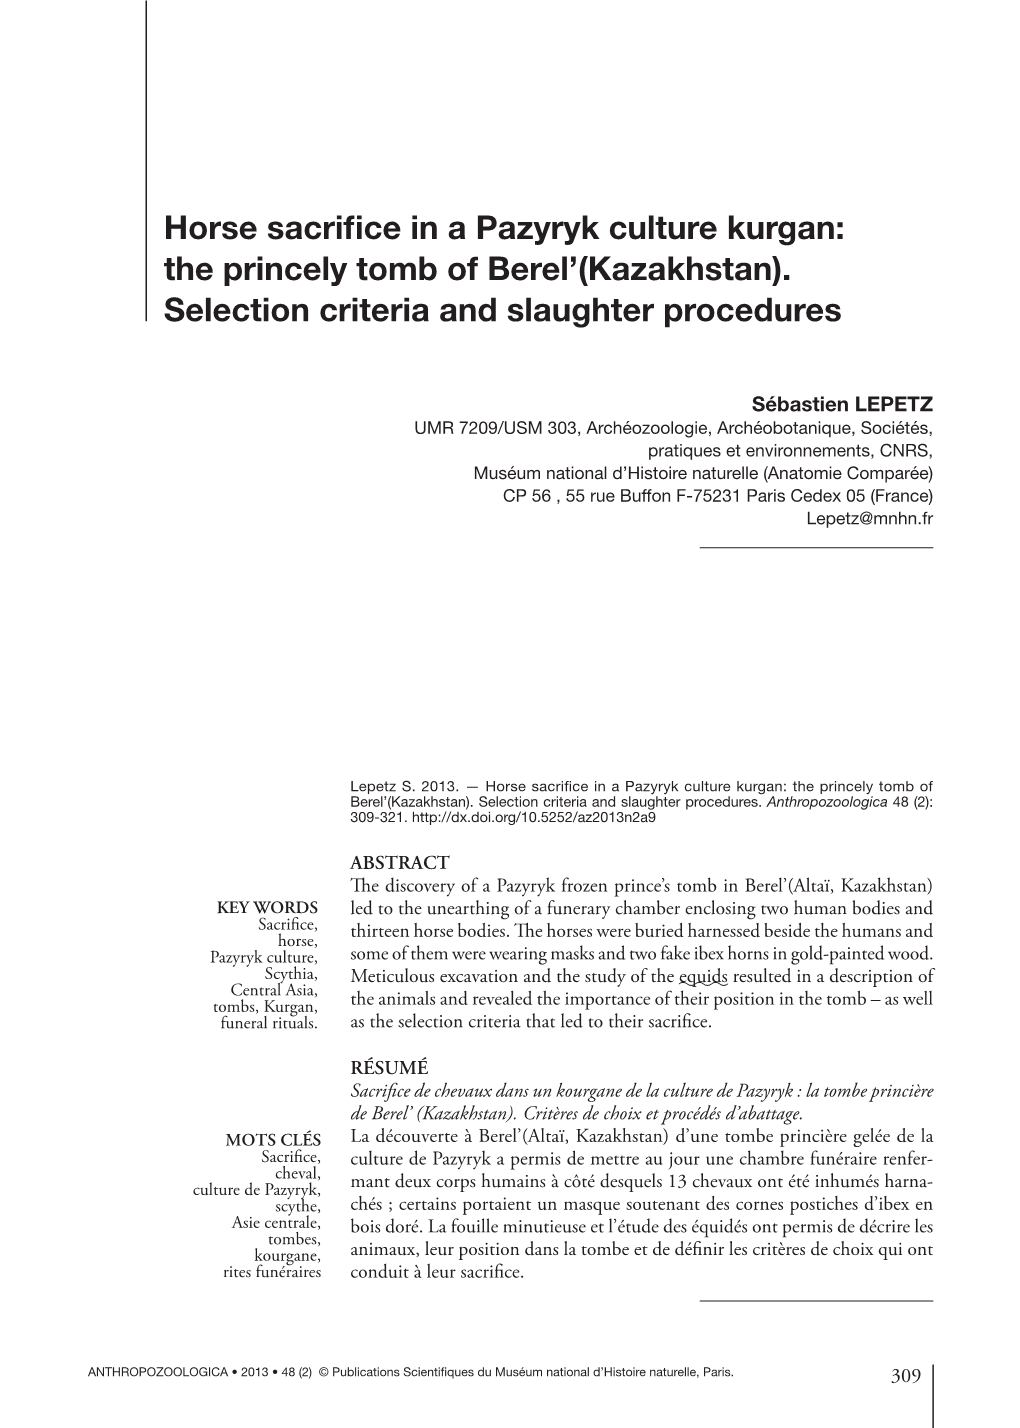 Horse Sacrifice in a Pazyryk Culture Kurgan: the Princely Tomb of Berel’(Kazakhstan)